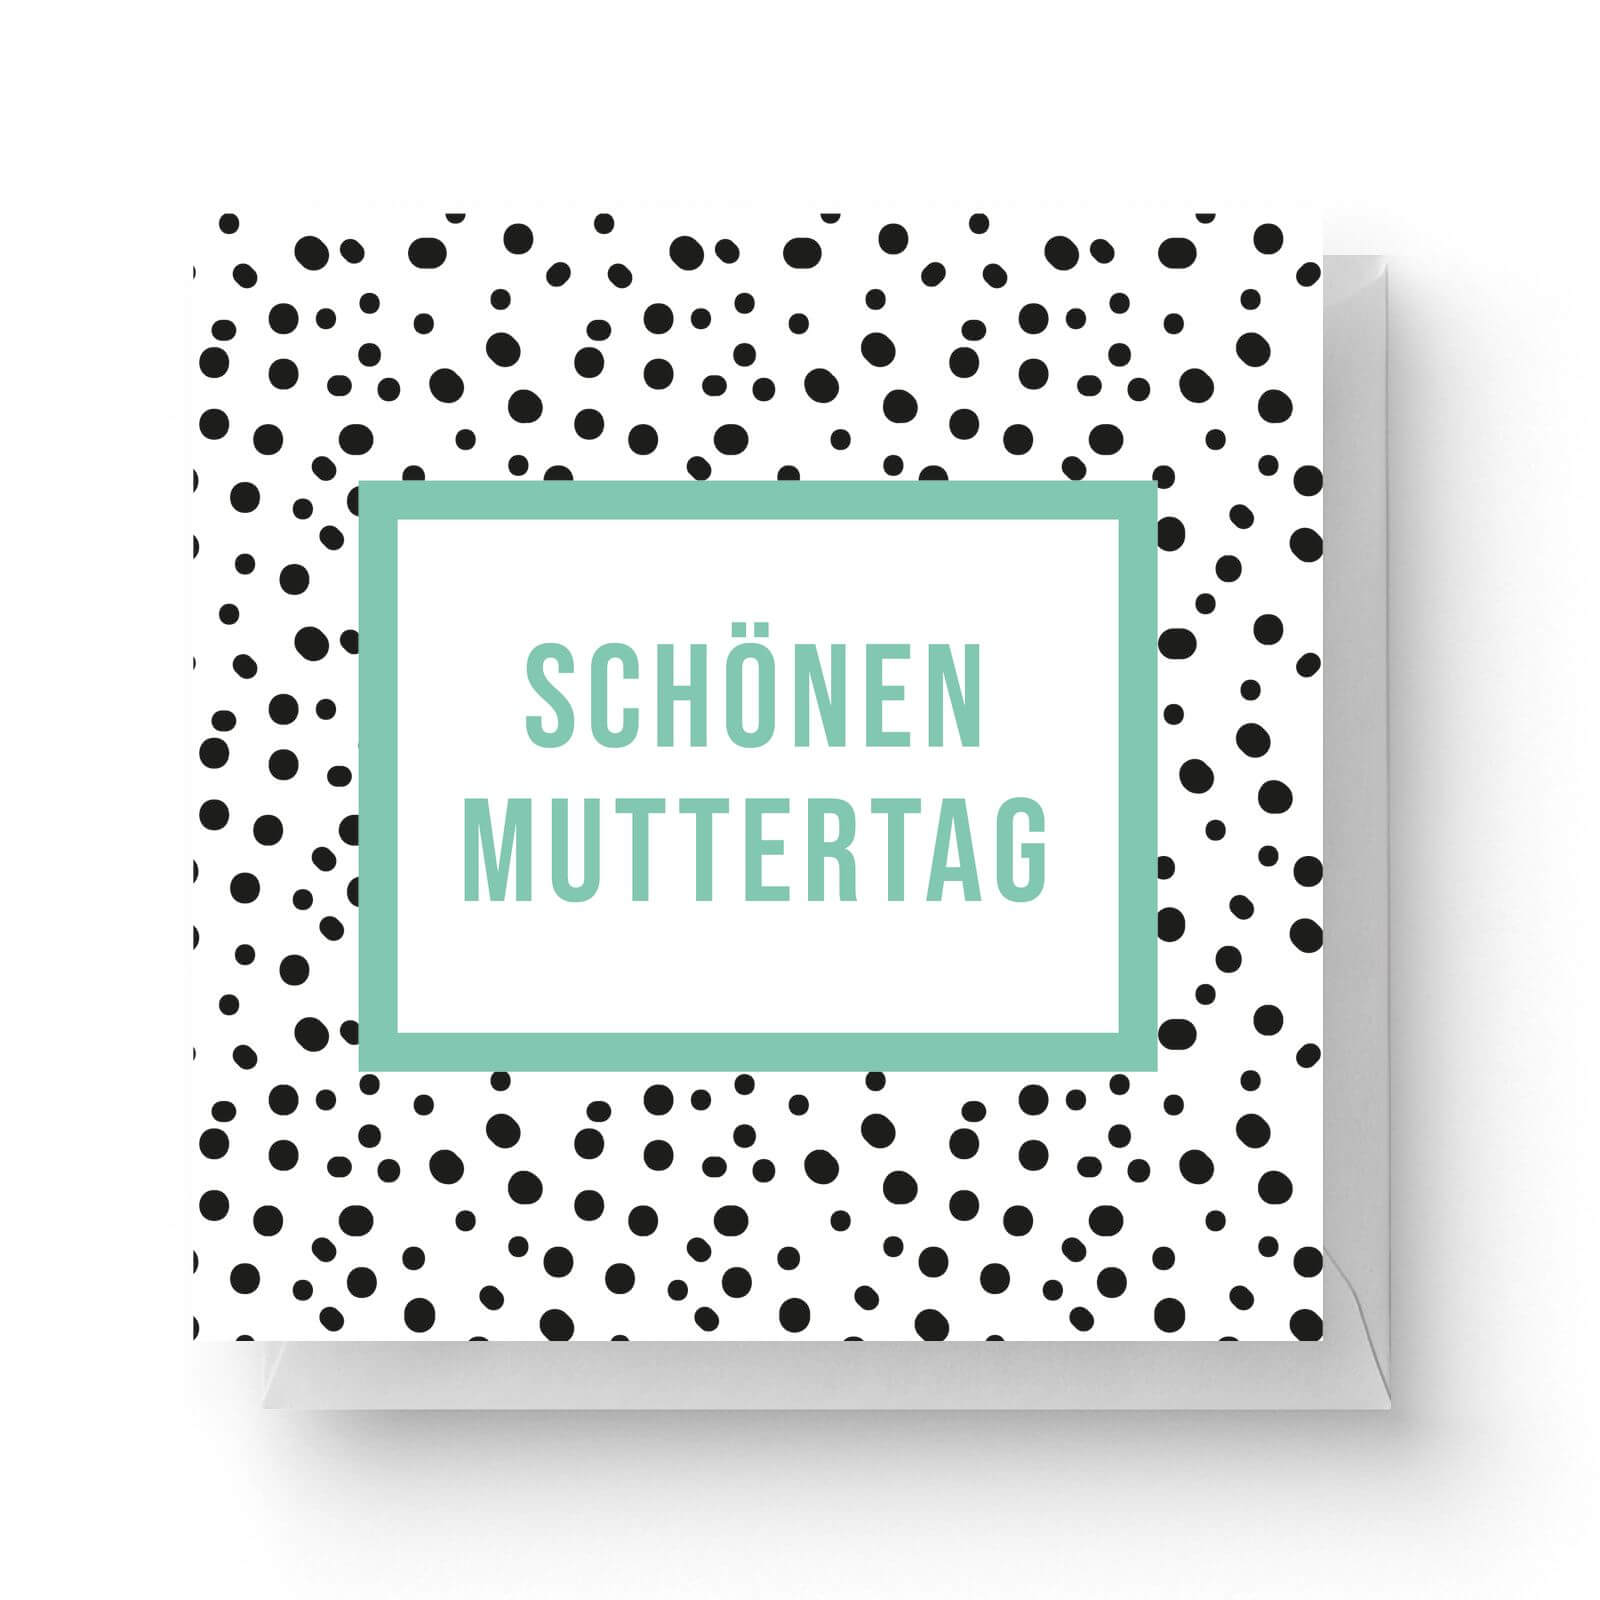 Image of Schönen Muttertag Square Greetings Card (14.8cm x 14.8cm)